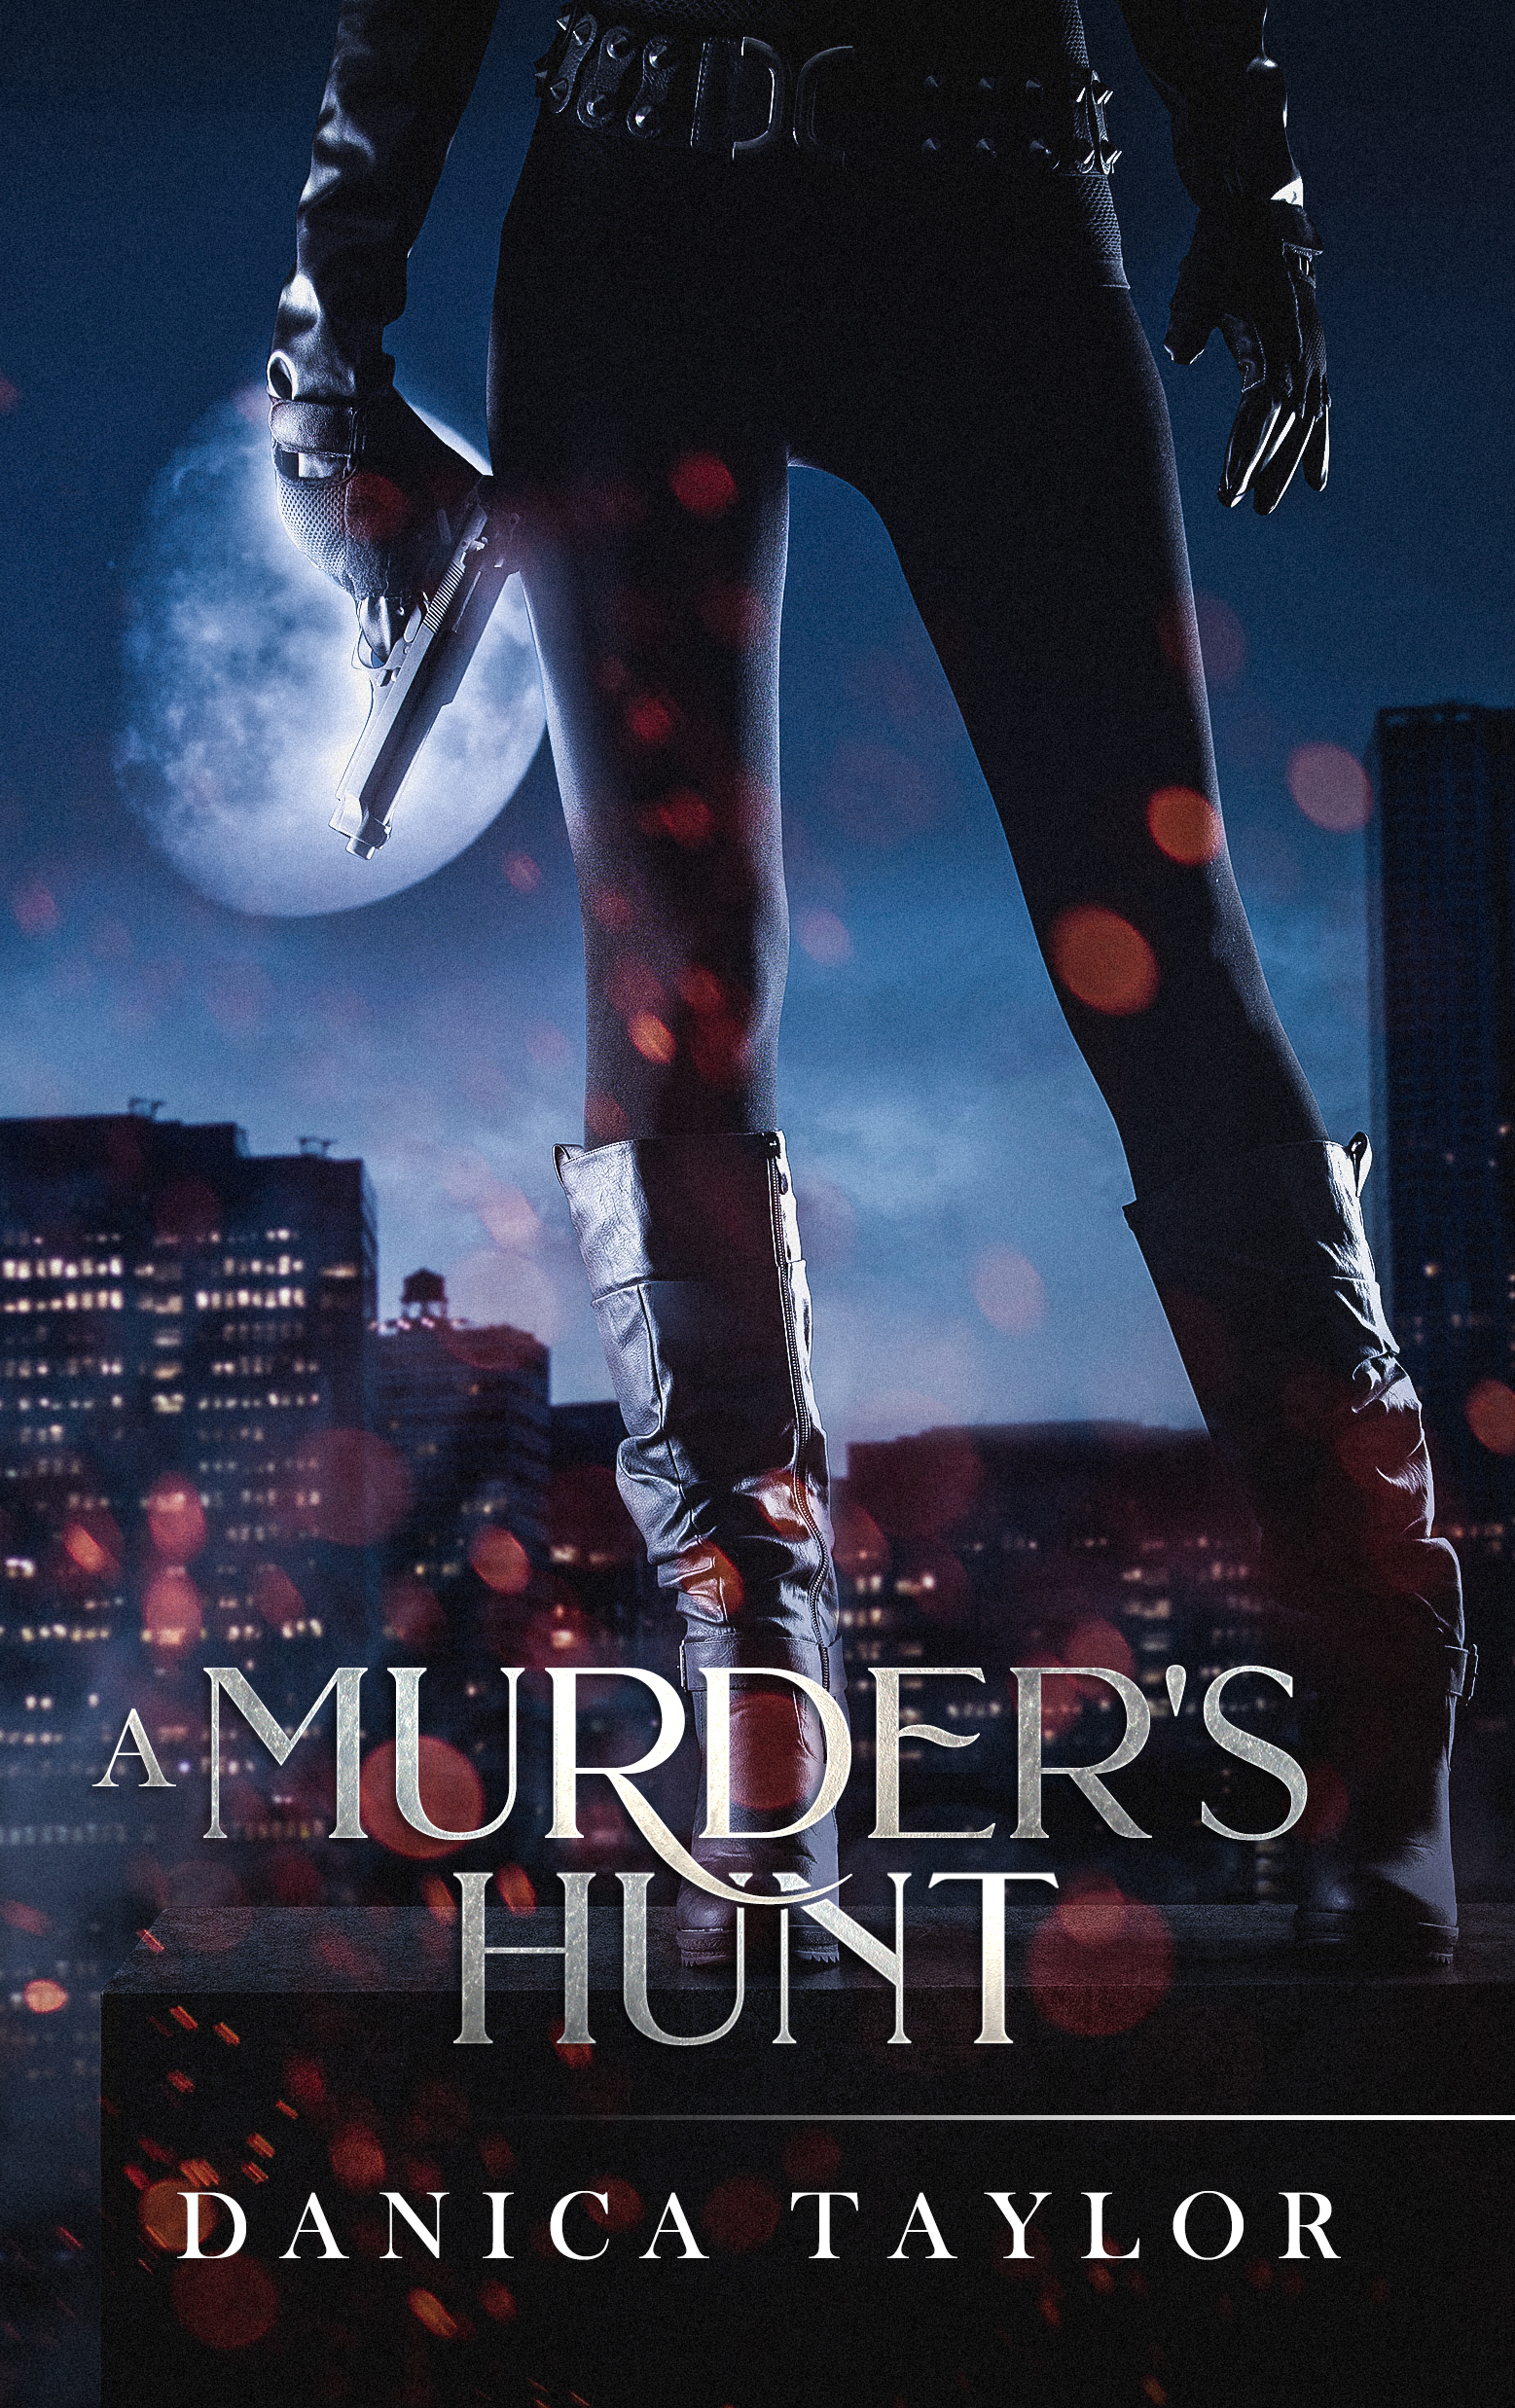 A murder's hunt (2018)